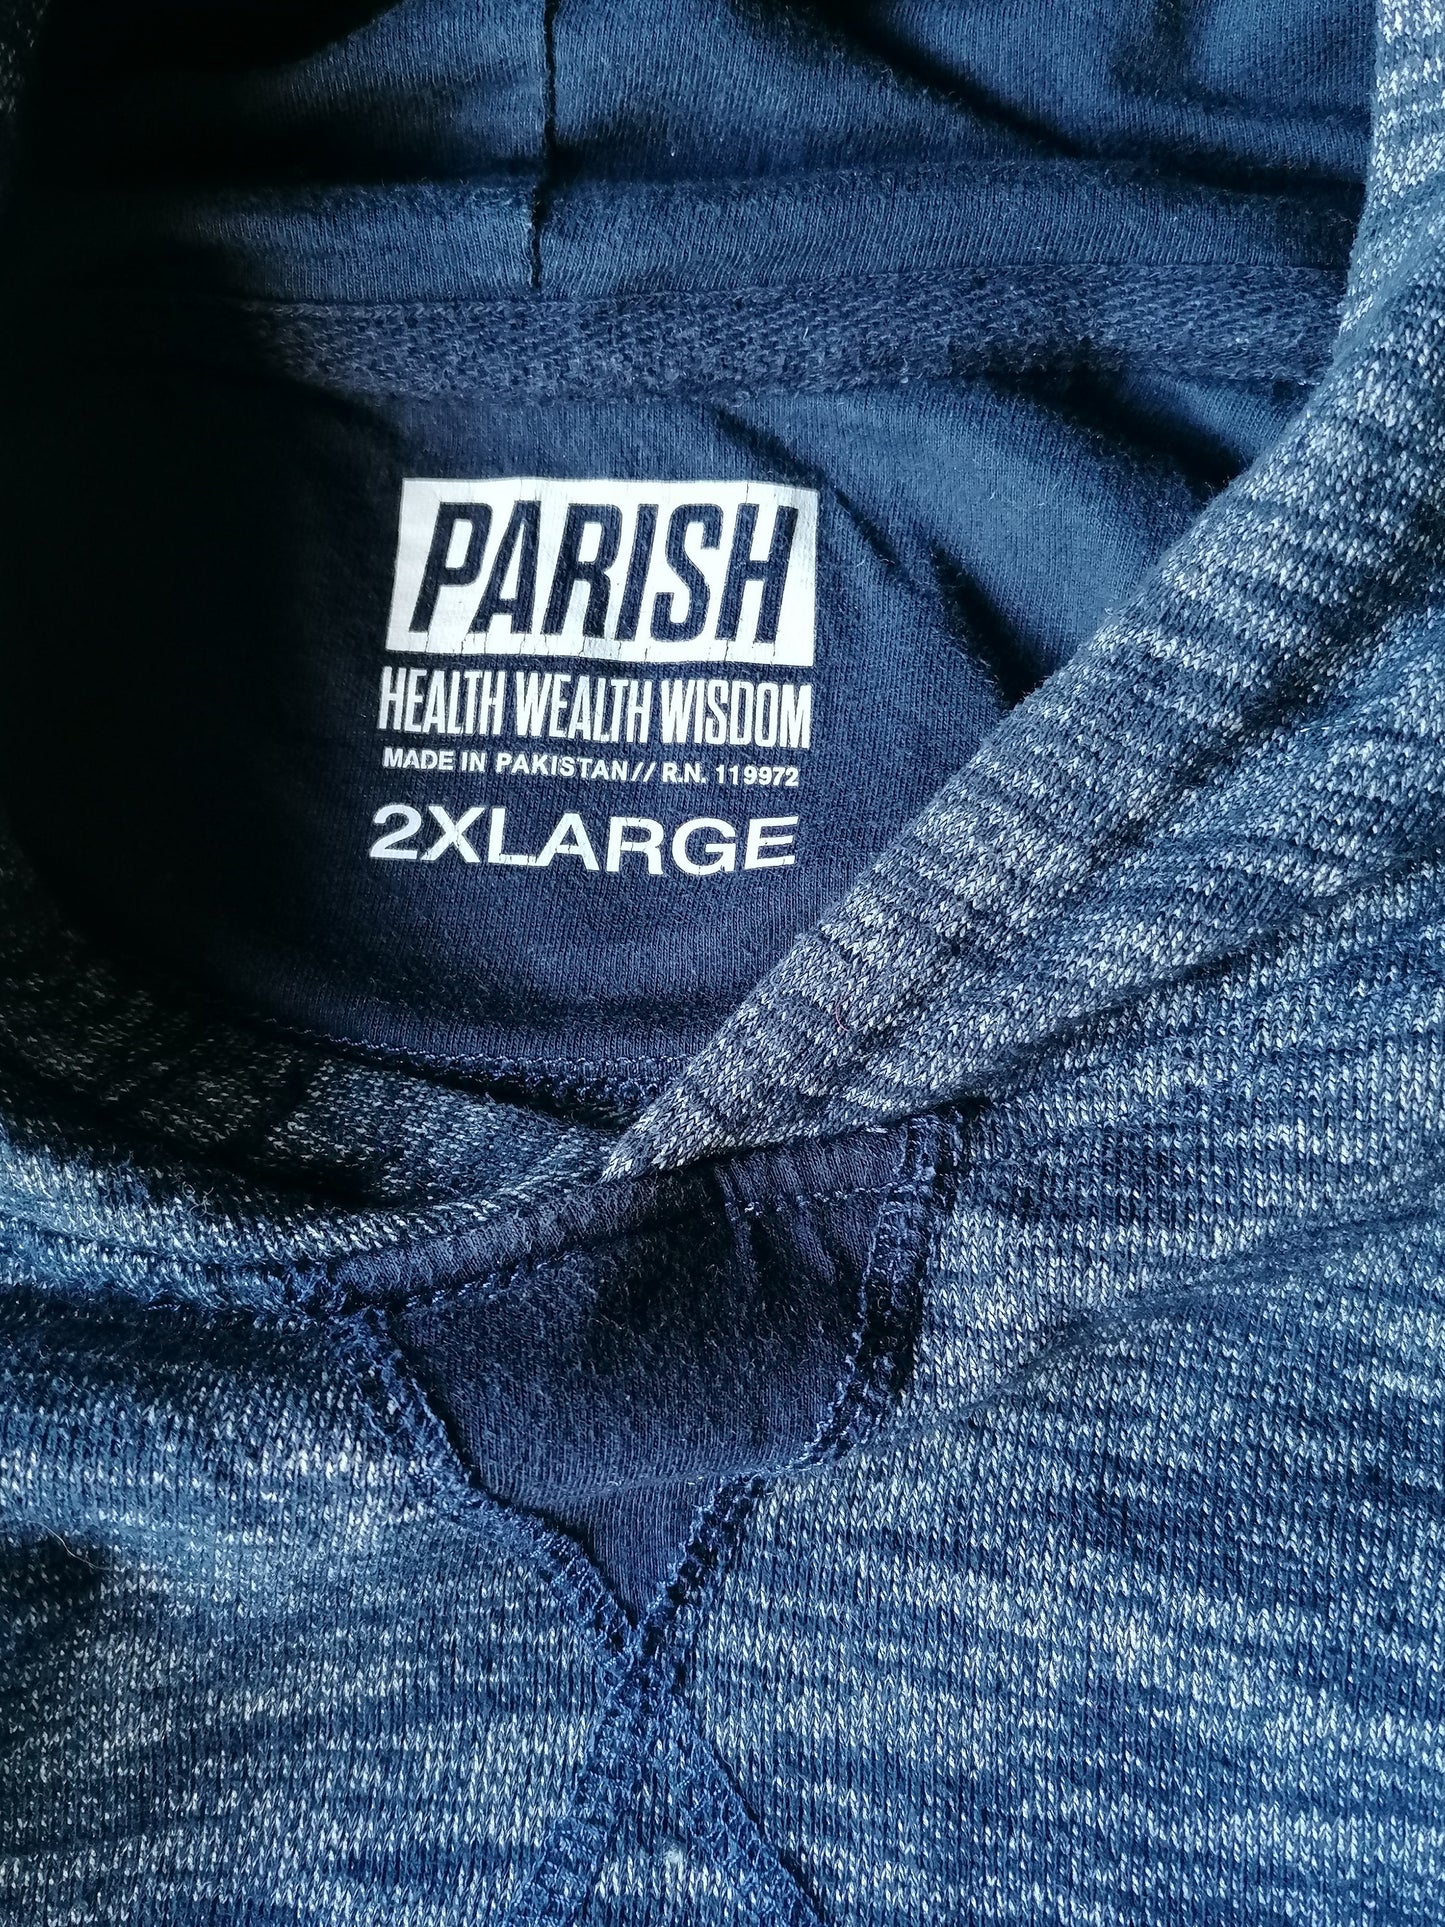 Parish Nation Hoodie. Blue gray mixed. Size XXL / 2XL.